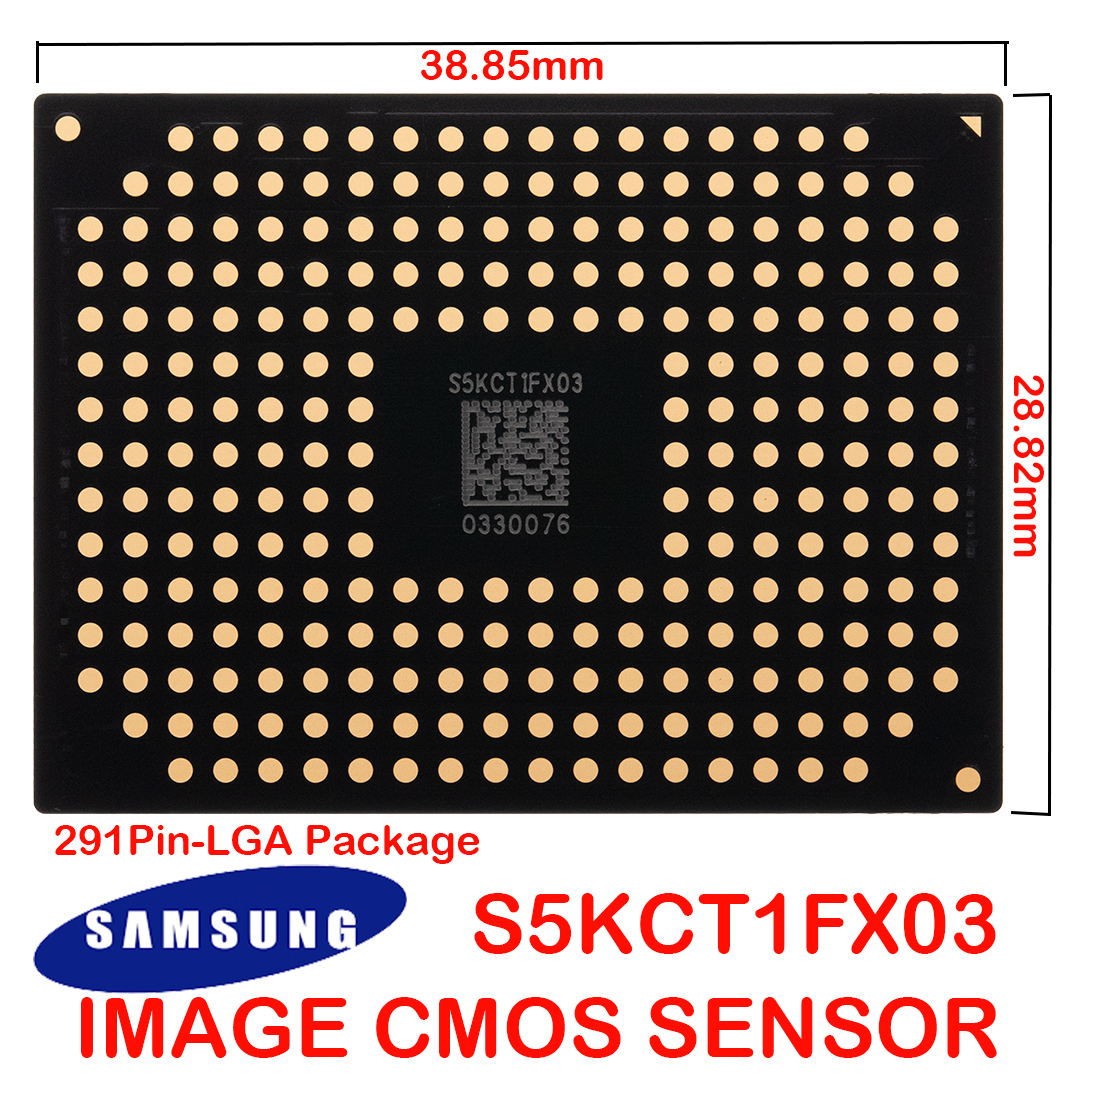 S5KCT1FX03，SAMSUNG  iMAGE CMOS Sensor， 三星1.11英寸残幅CMOS图像传感器， 三星超大尺寸超大靶面图像传感器， APS-C Format画幅图像传感器芯片，23.6 x 15.8mmAPS-C SENSOR,SAMSUNG semiconductor Agent,S5KCT1FX03 solution,S5KCT1FX03 Solutions company,S5KCT1FX03解决方案商，三星相机维修店, SAMSUNG DSLR SENSOR,Mirrorless Camera sensor，DSLR sensor,MLC SENSOR